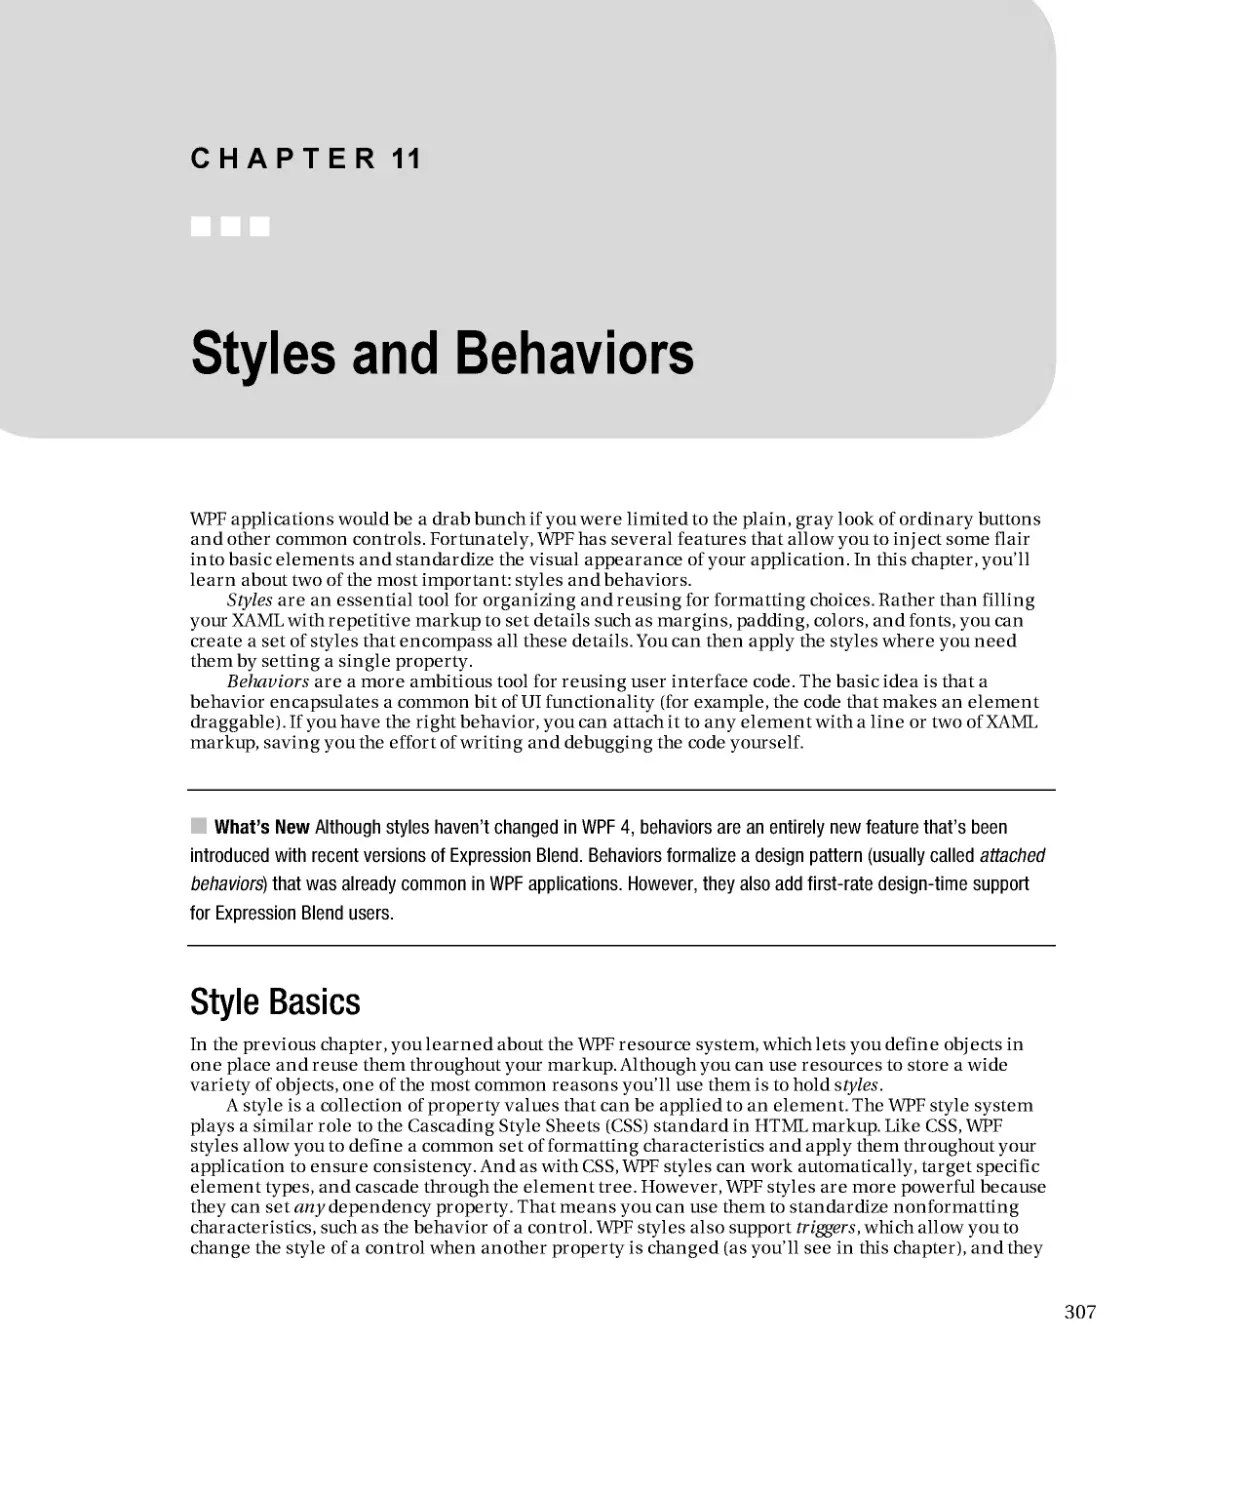 Styles and Behaviors